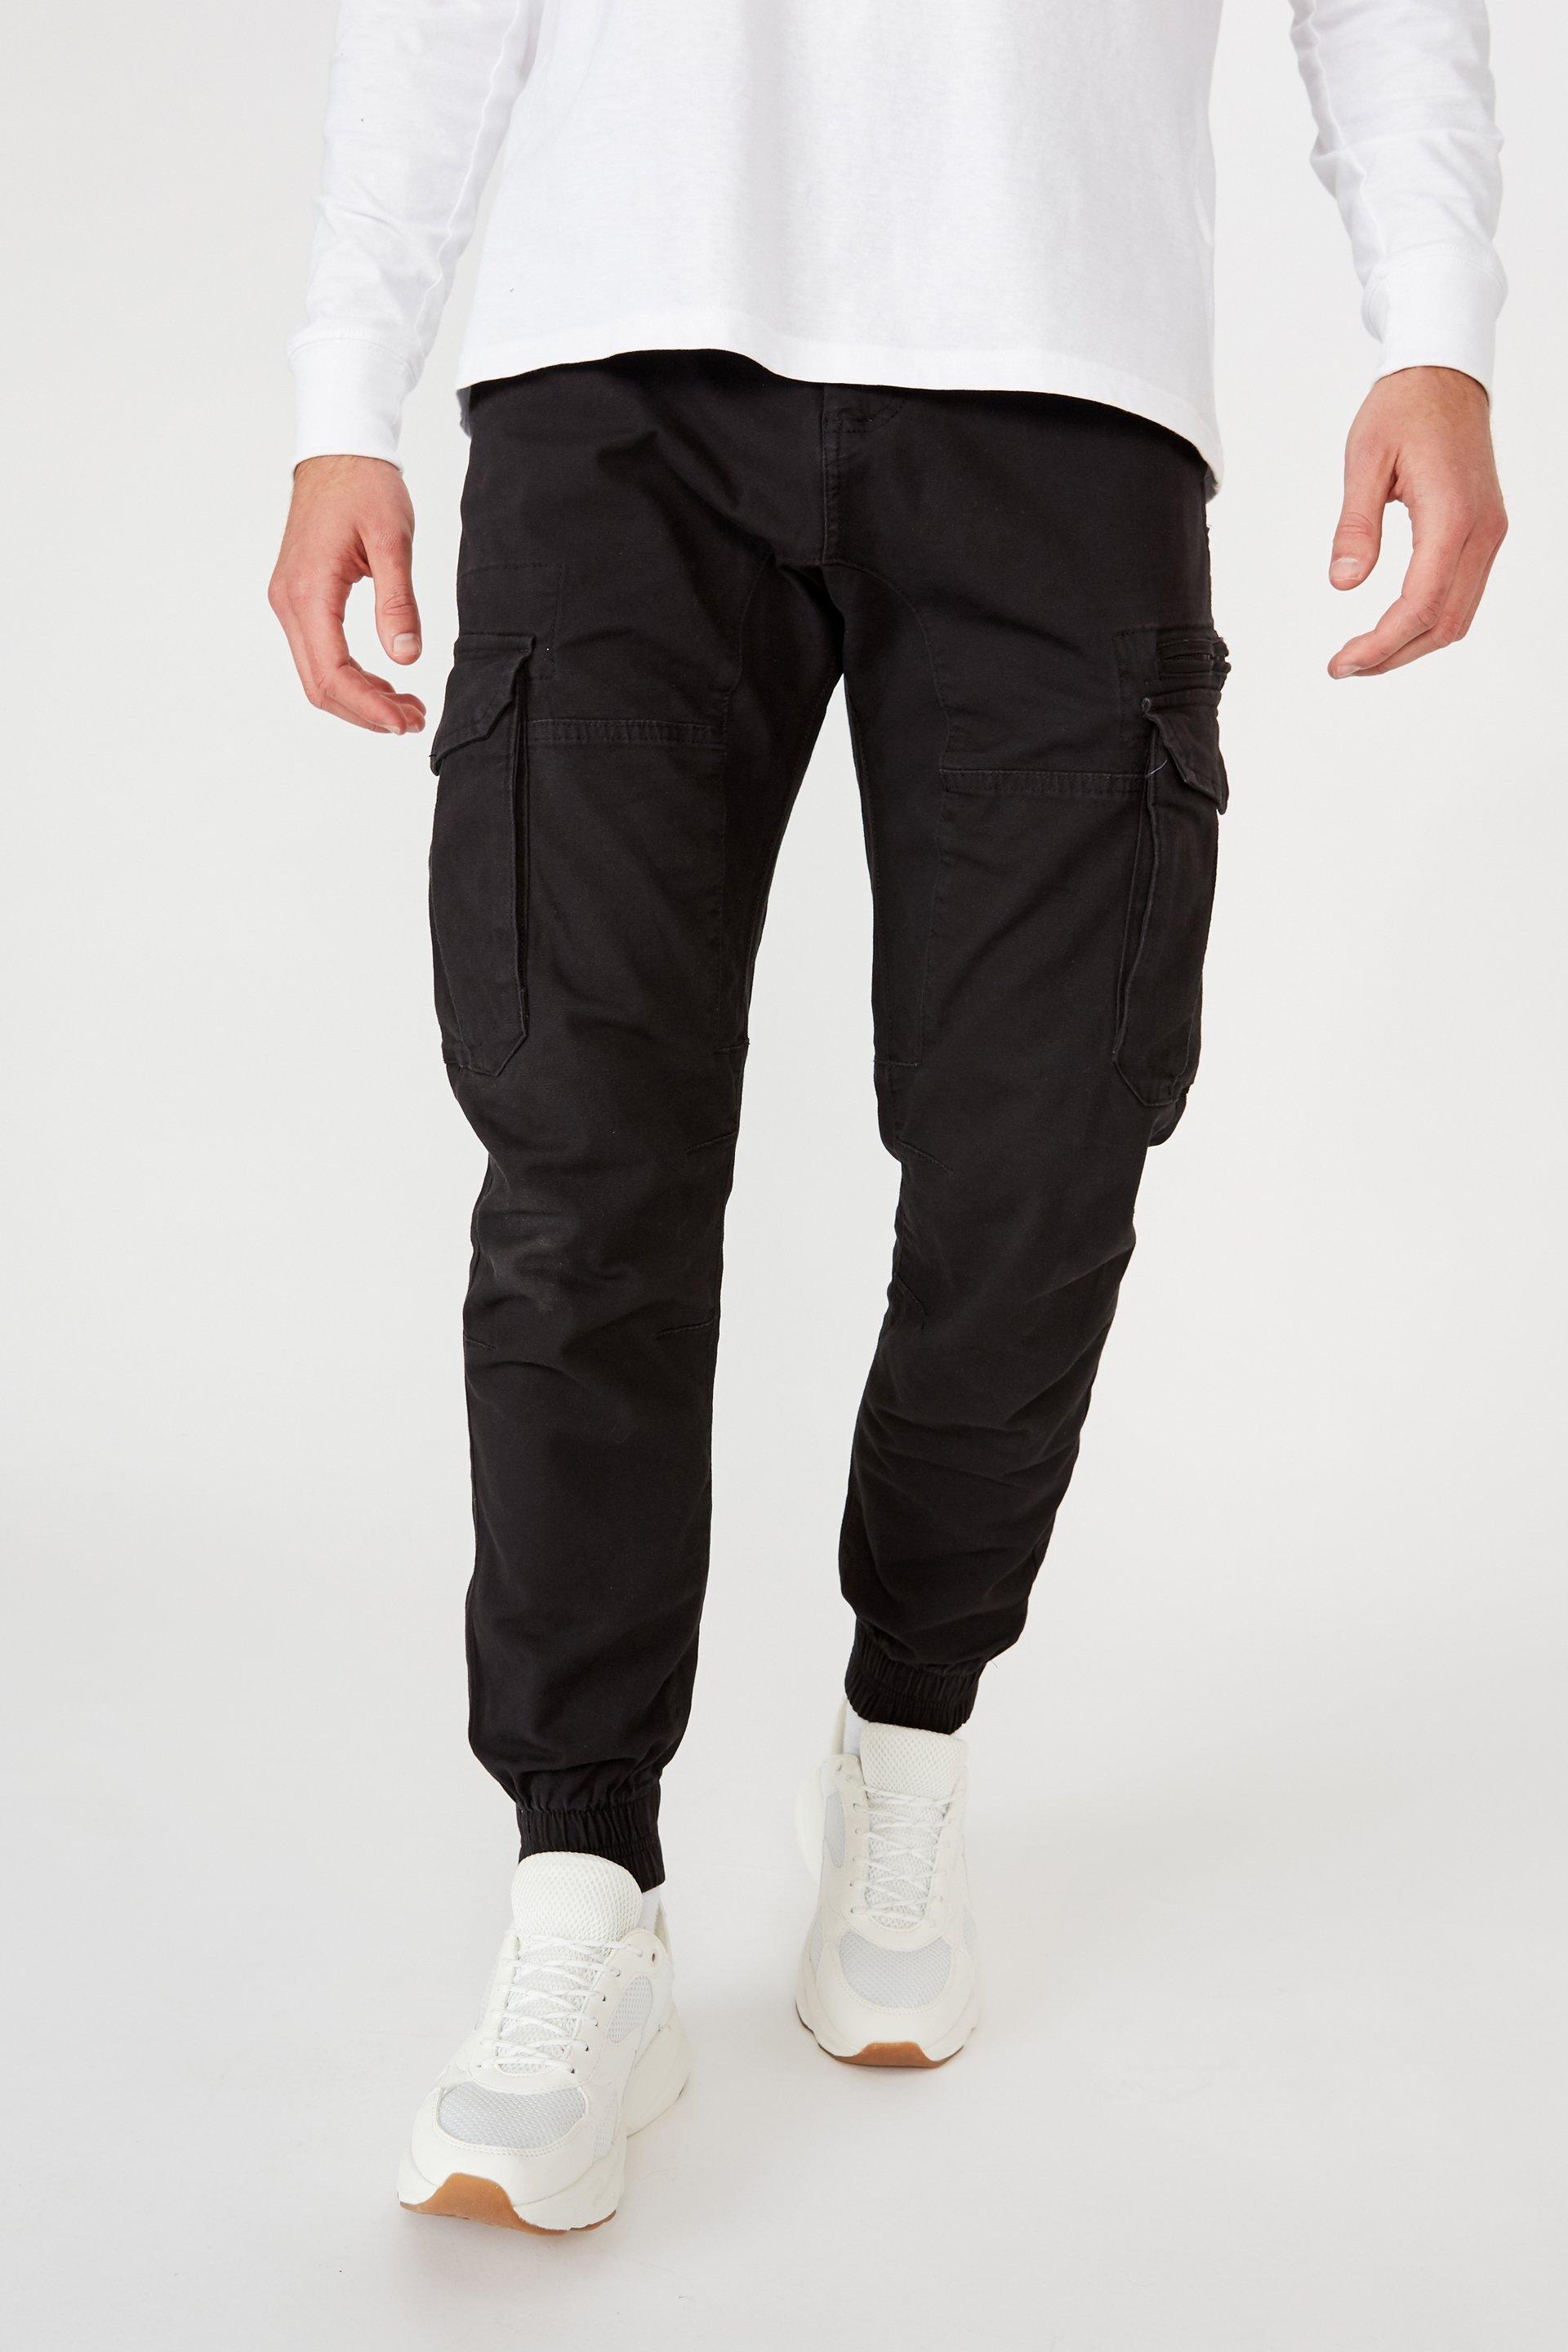 Urban jogger - true black cargo Cotton On Pants & Chinos | Superbalist.com